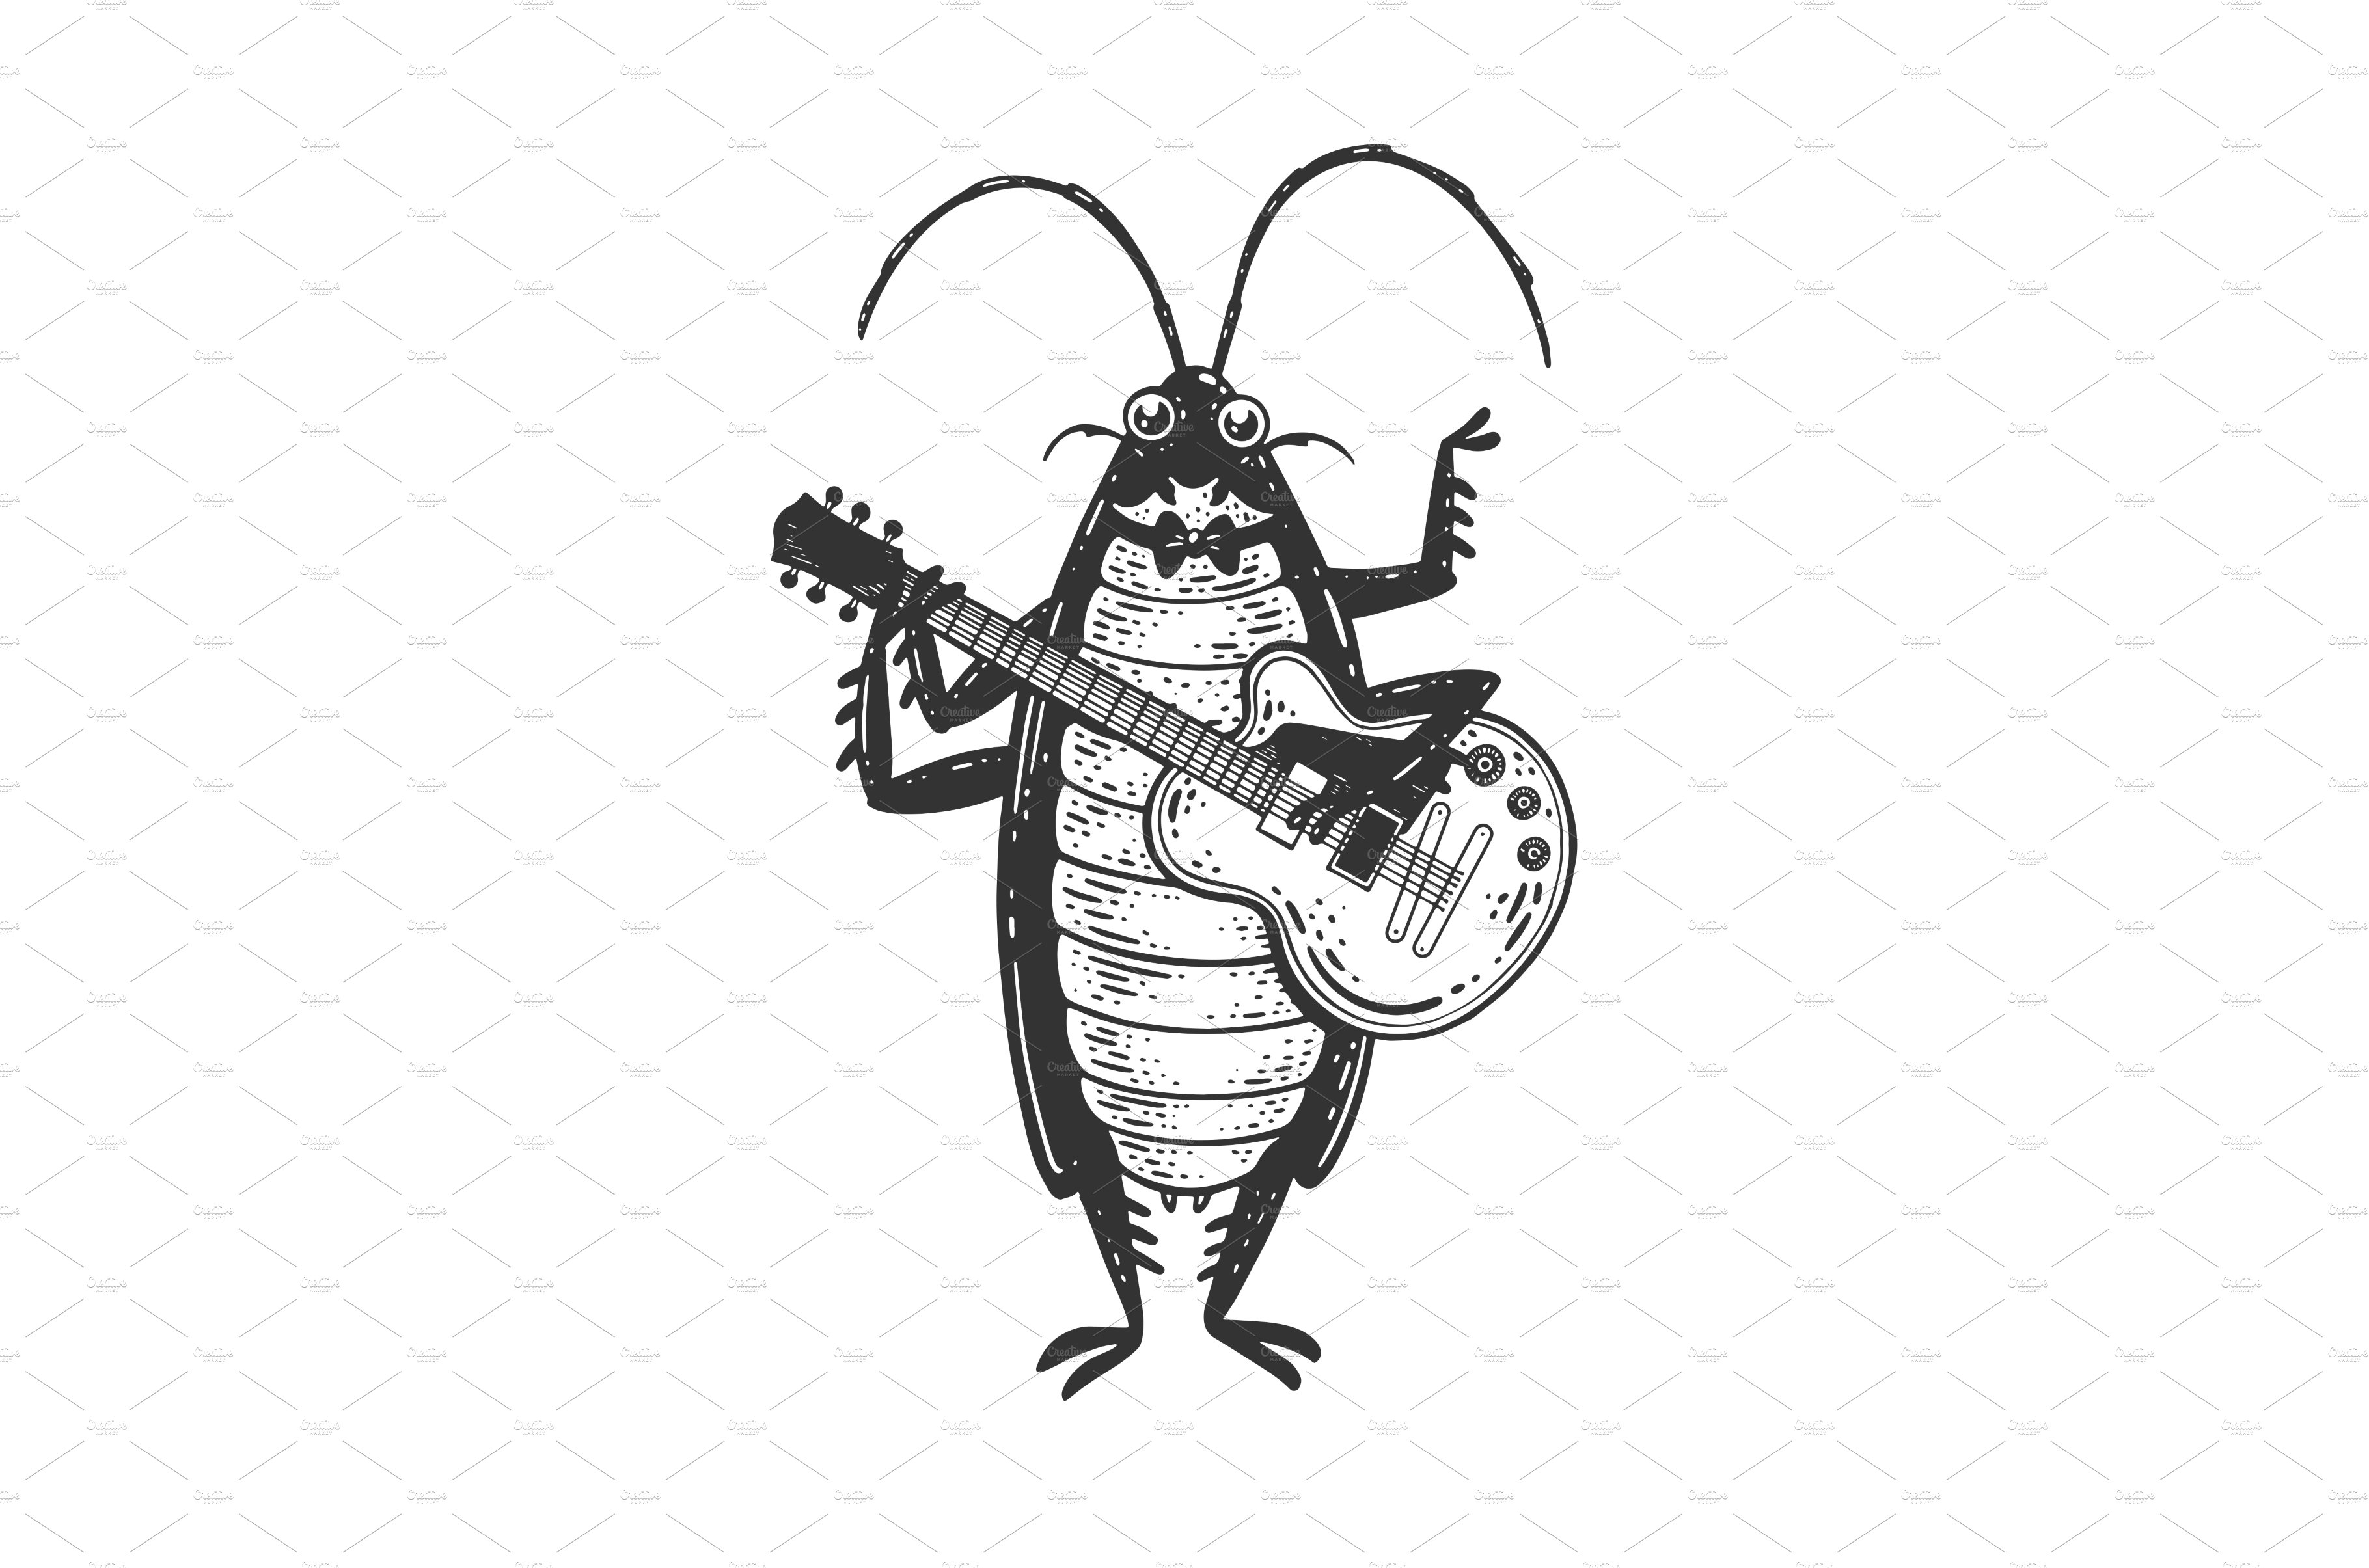 Cockroach guitar sketch vector cover image.